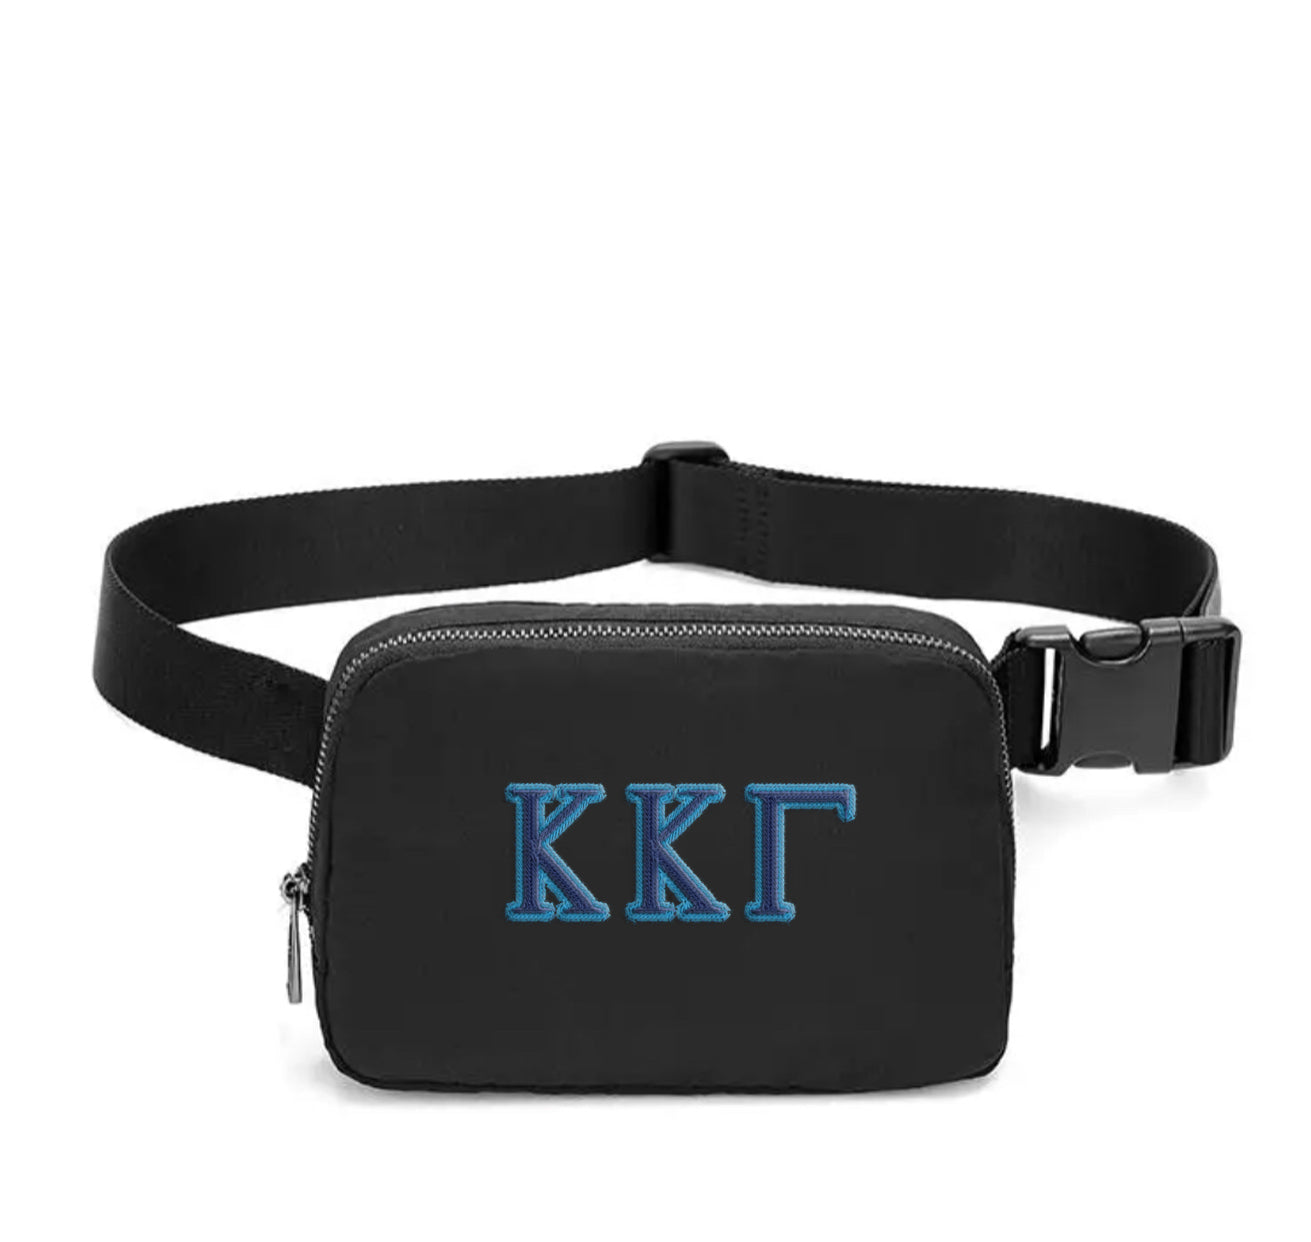 Kappa Kappa Gamma Embroidered Belt Bag